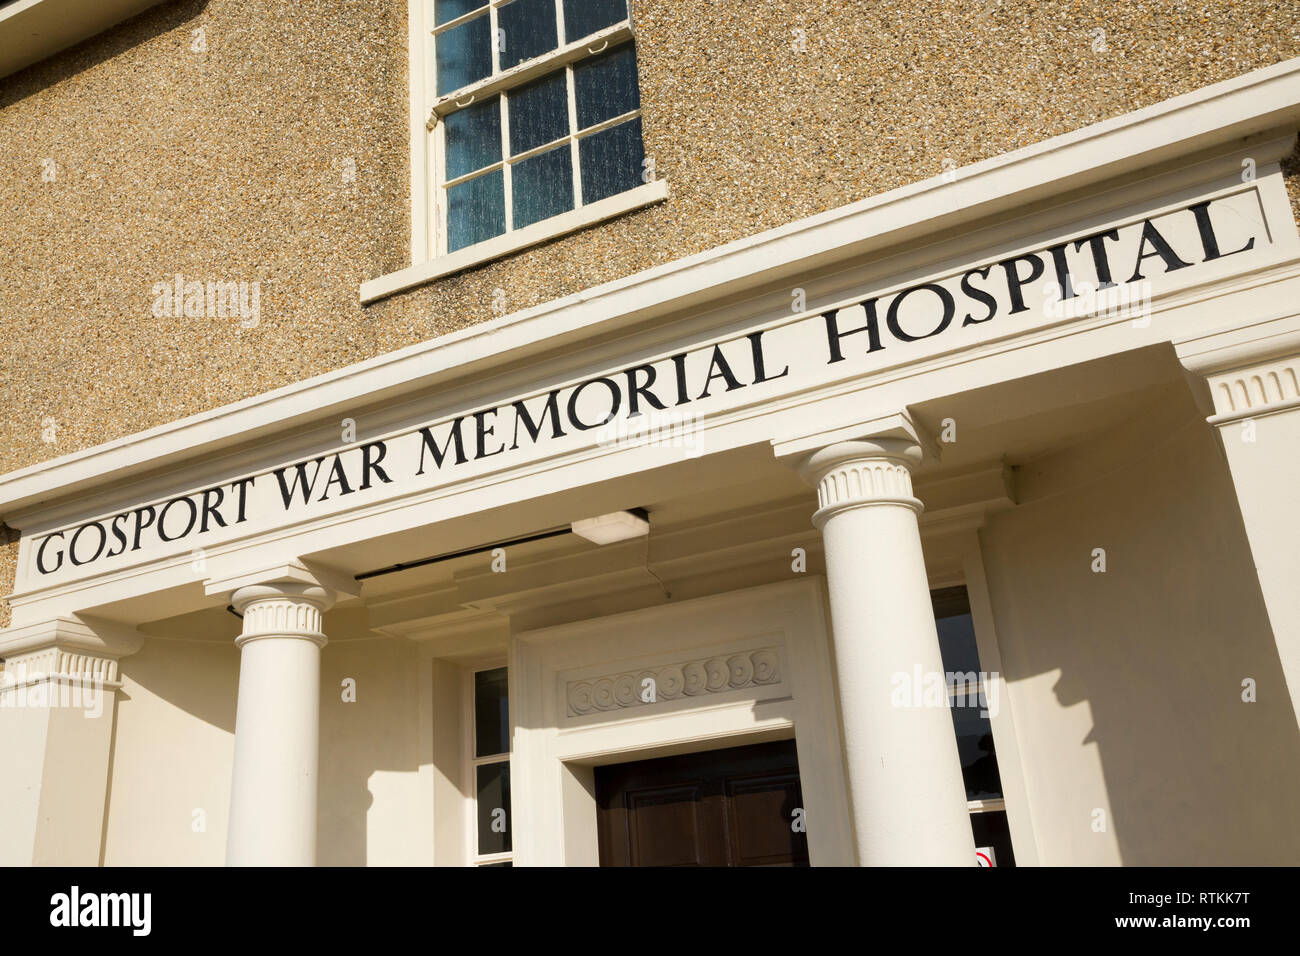 Façade et entrée de la Gosport War Memorial Hospital. Le Hampshire. UK. Banque D'Images